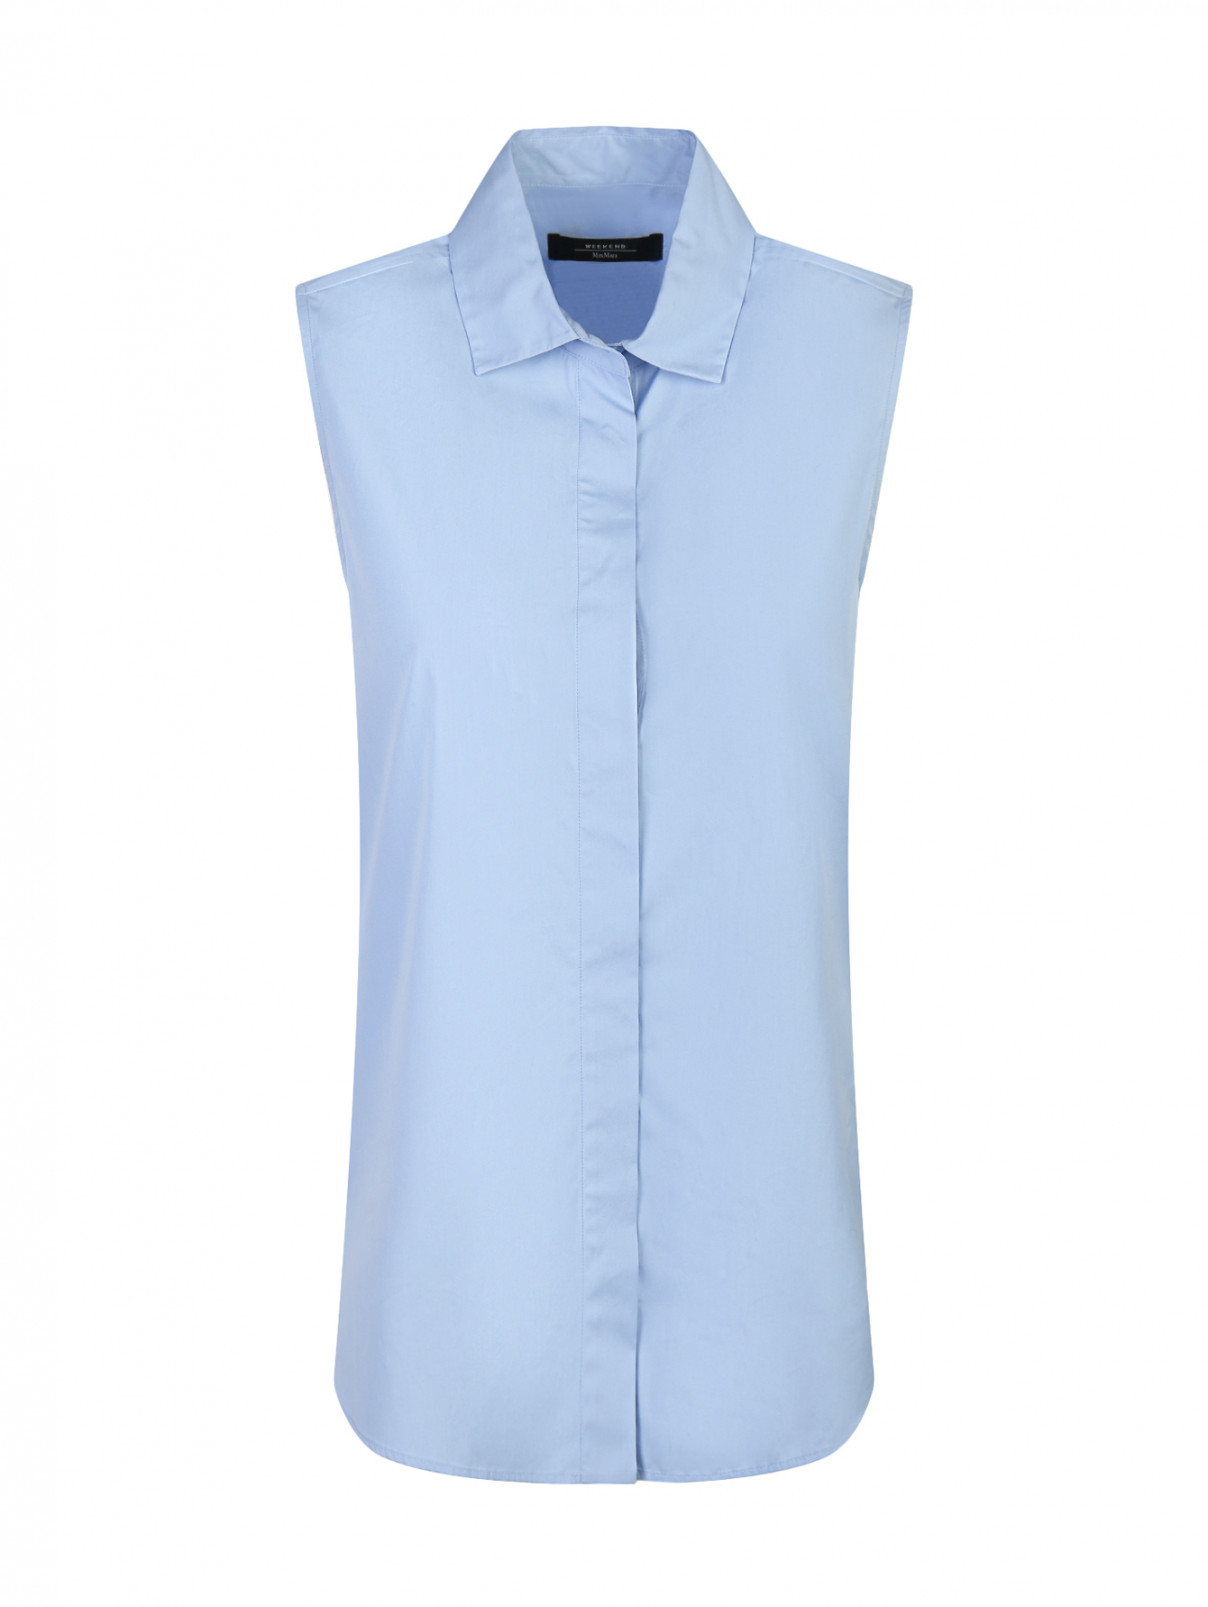 Блуза из хлопка без рукавов Weekend Max Mara  –  Общий вид  – Цвет:  Синий